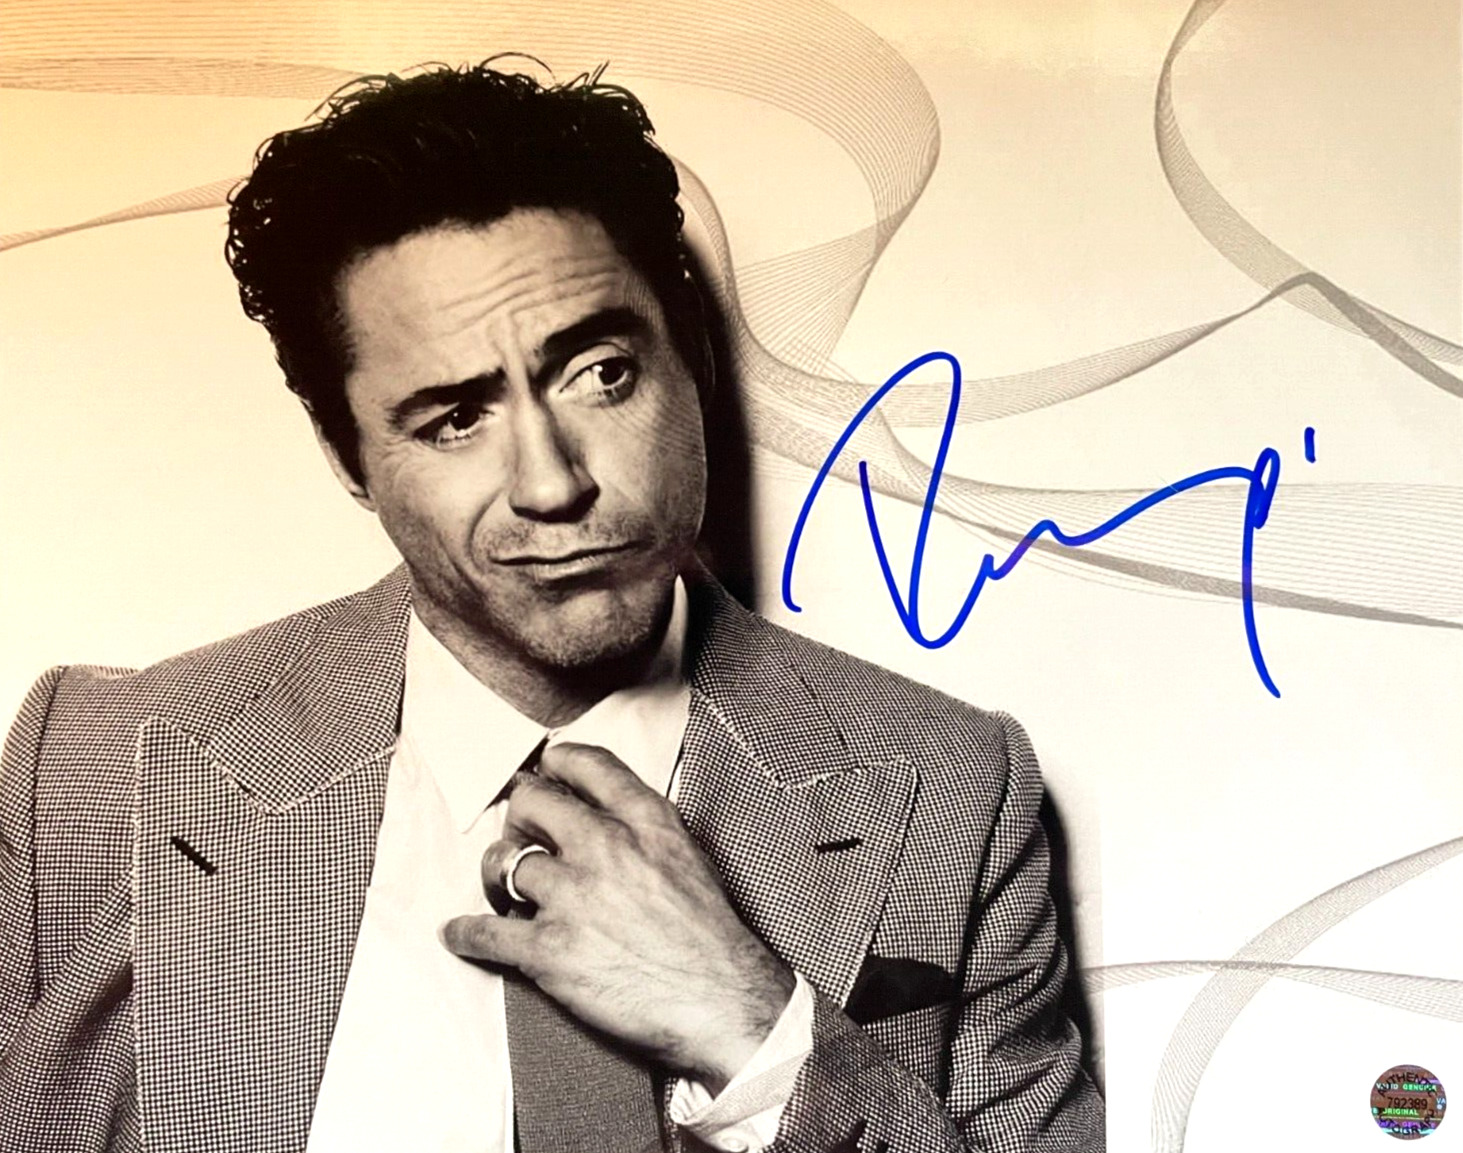 Robert Downey Jr. Hand-Signed 8x10 inch Photo Original Autograph w/COA